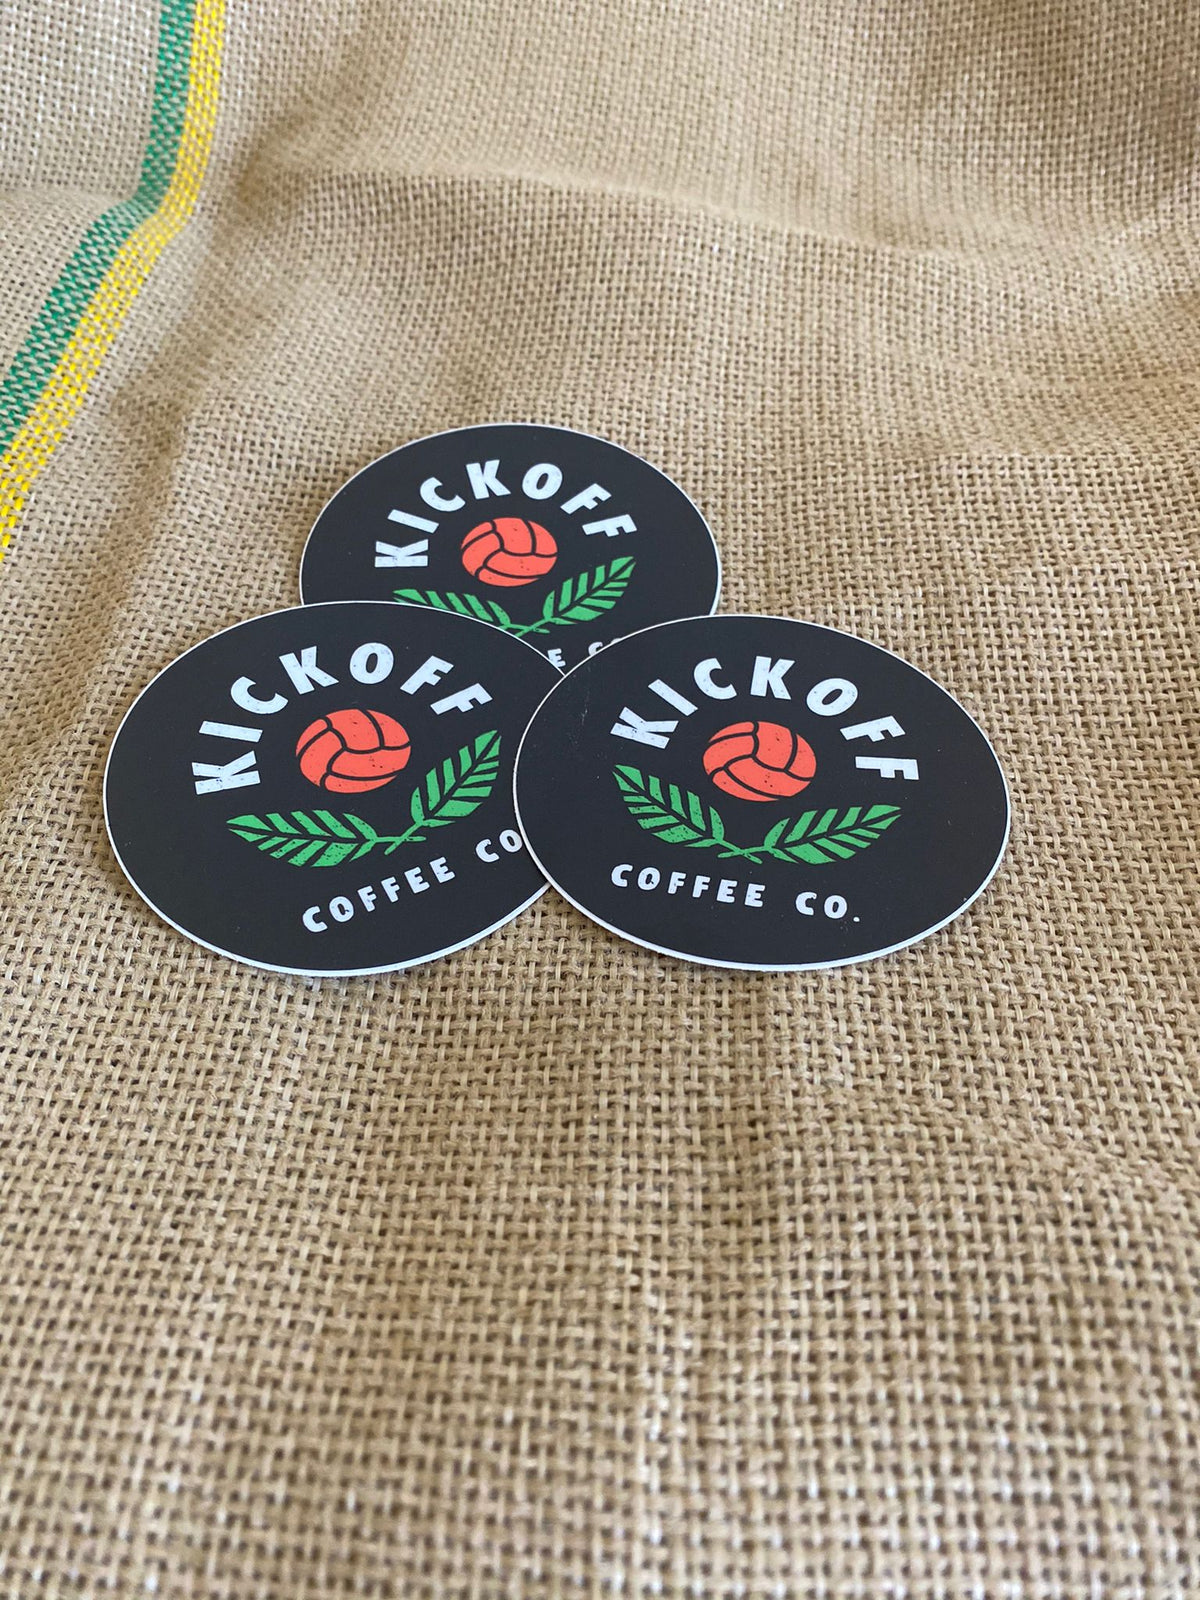 Kickoff Coffee Co. Logo Sticker